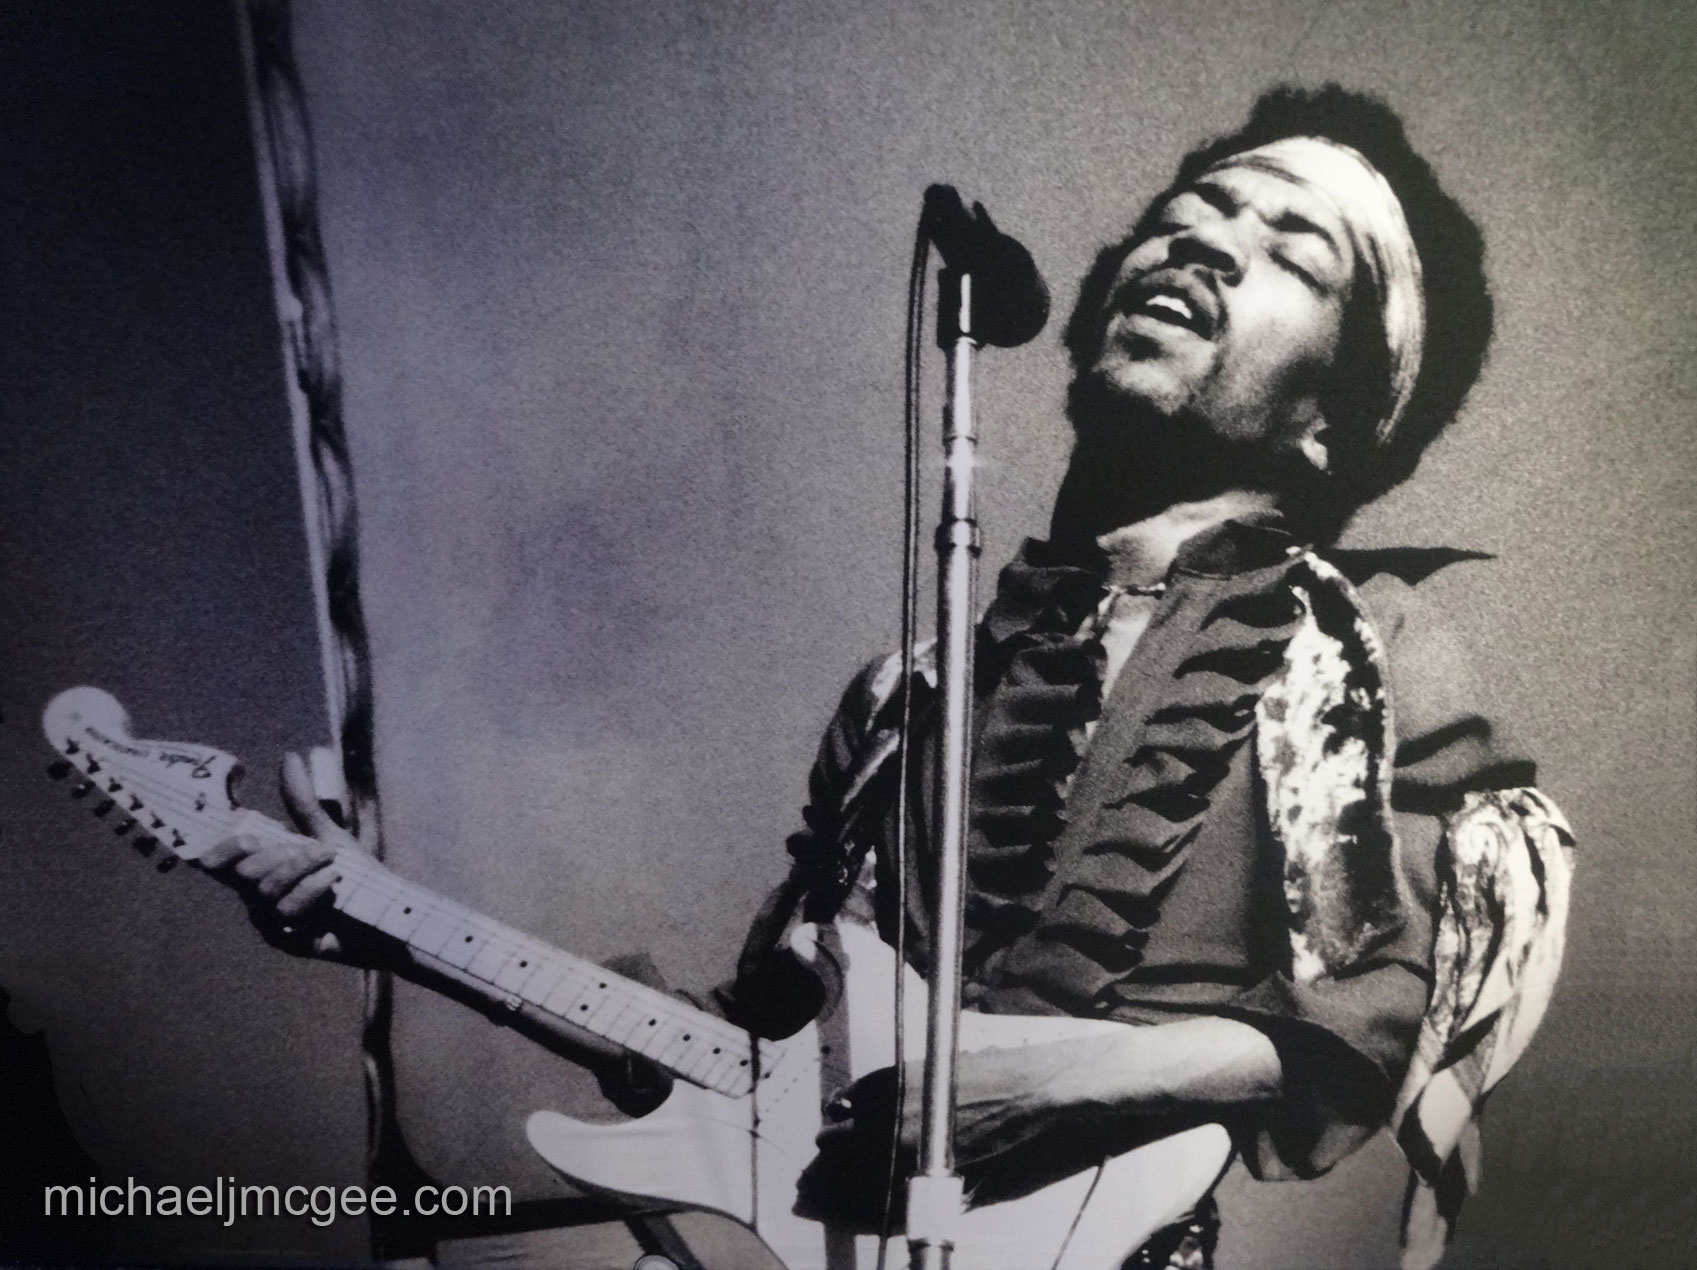 Jimi Hendrix / michaeljmcgee.com